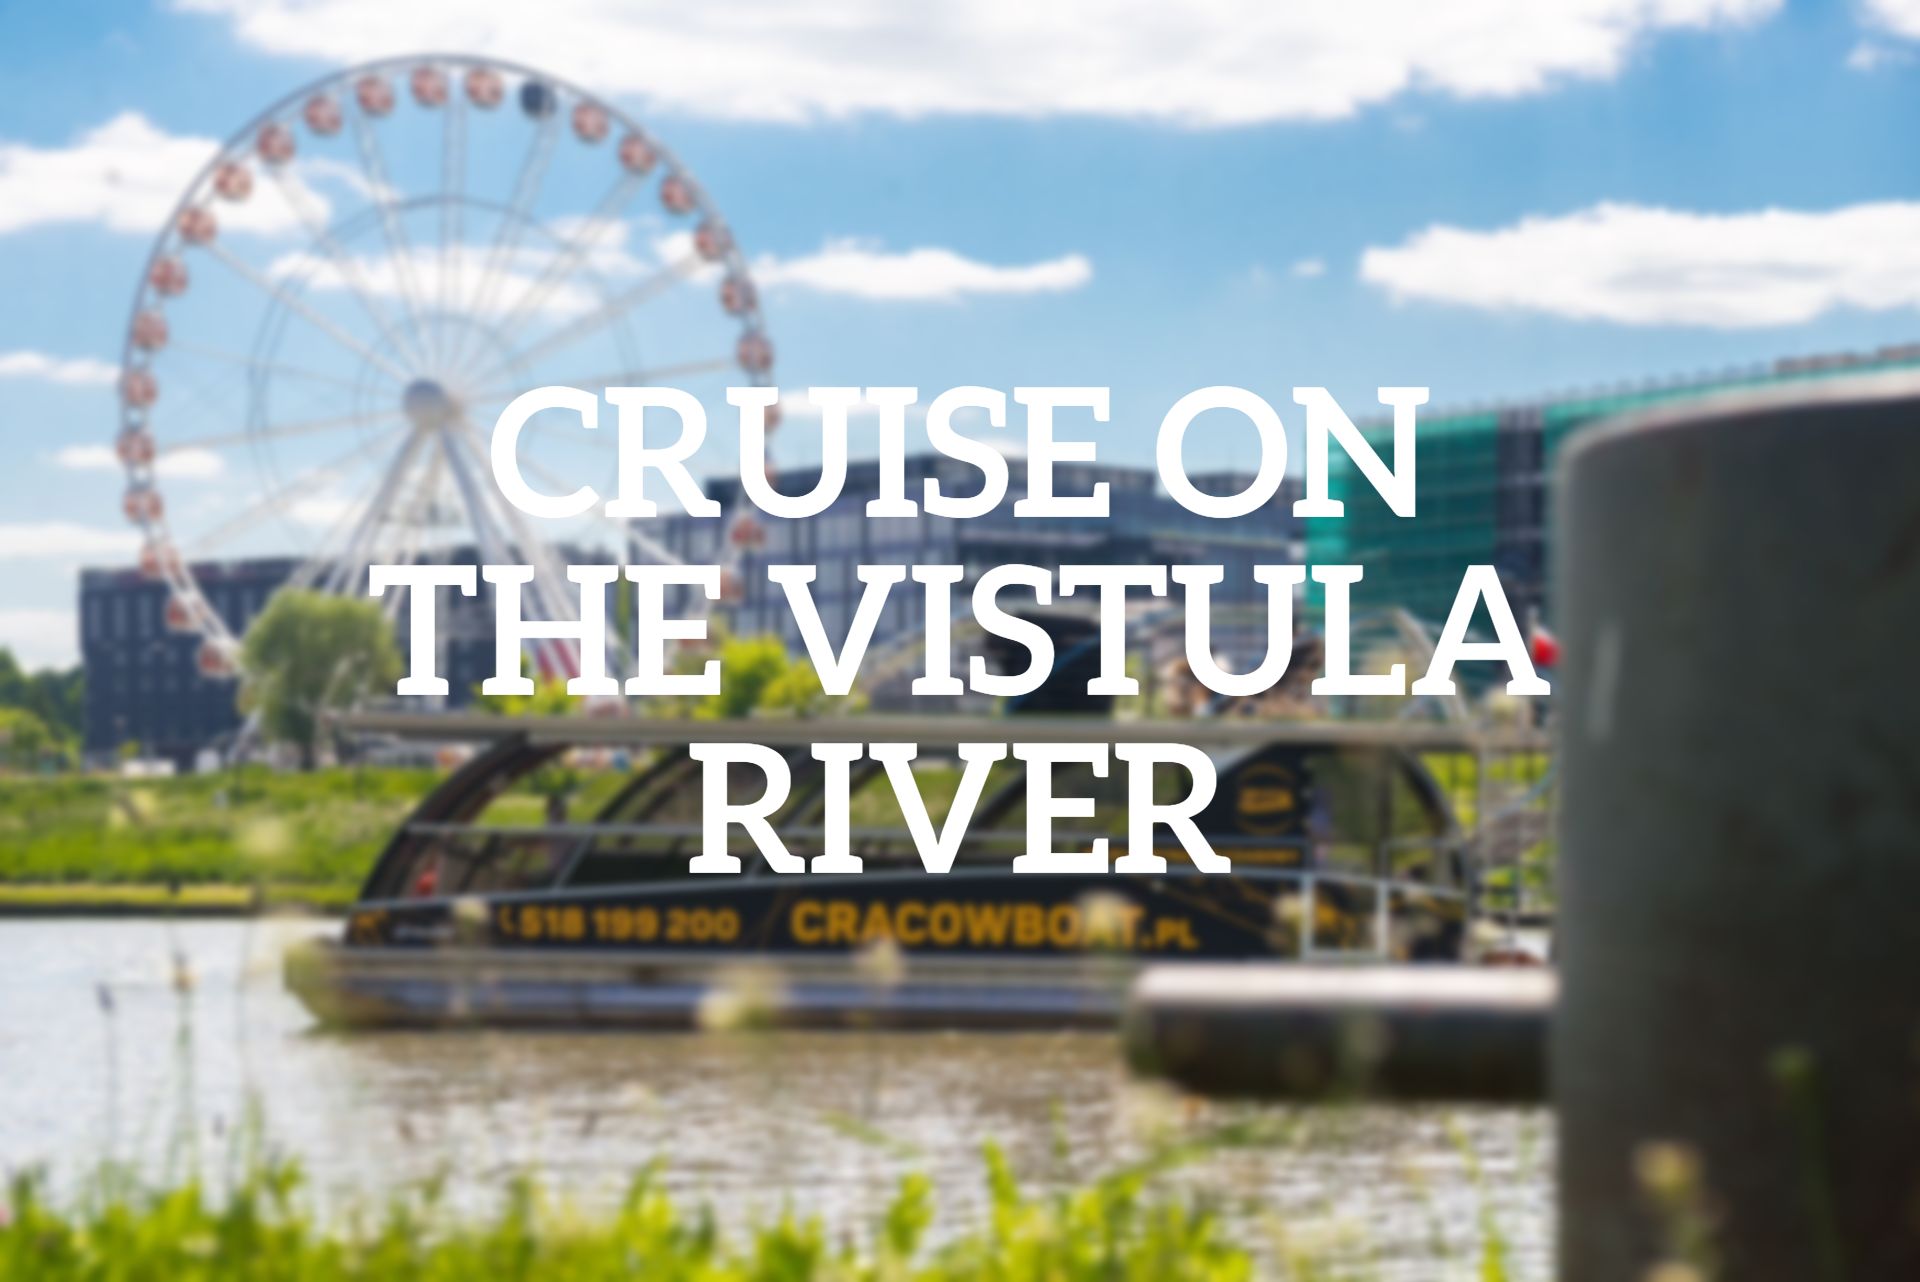 Cruise on the vistula river